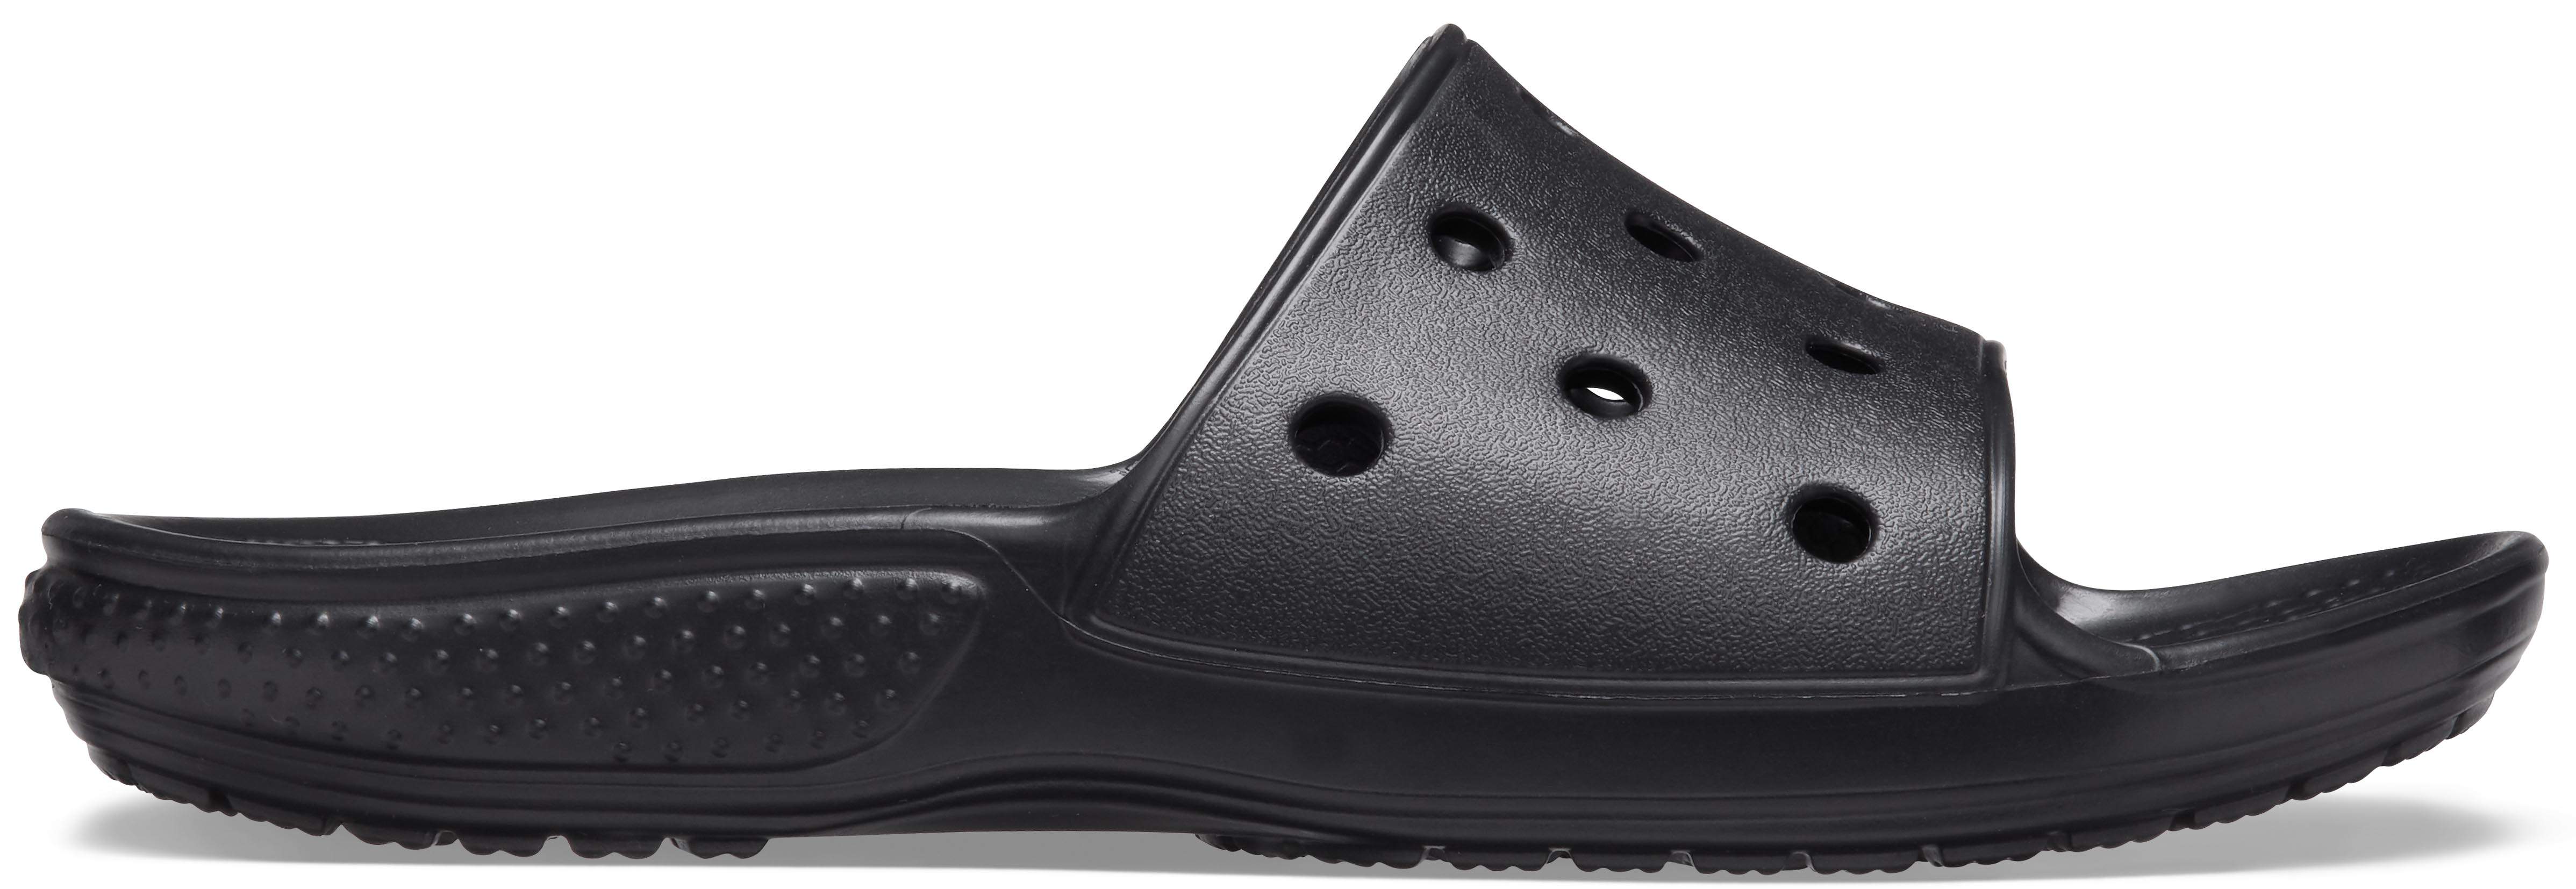 crocs adjustable slides